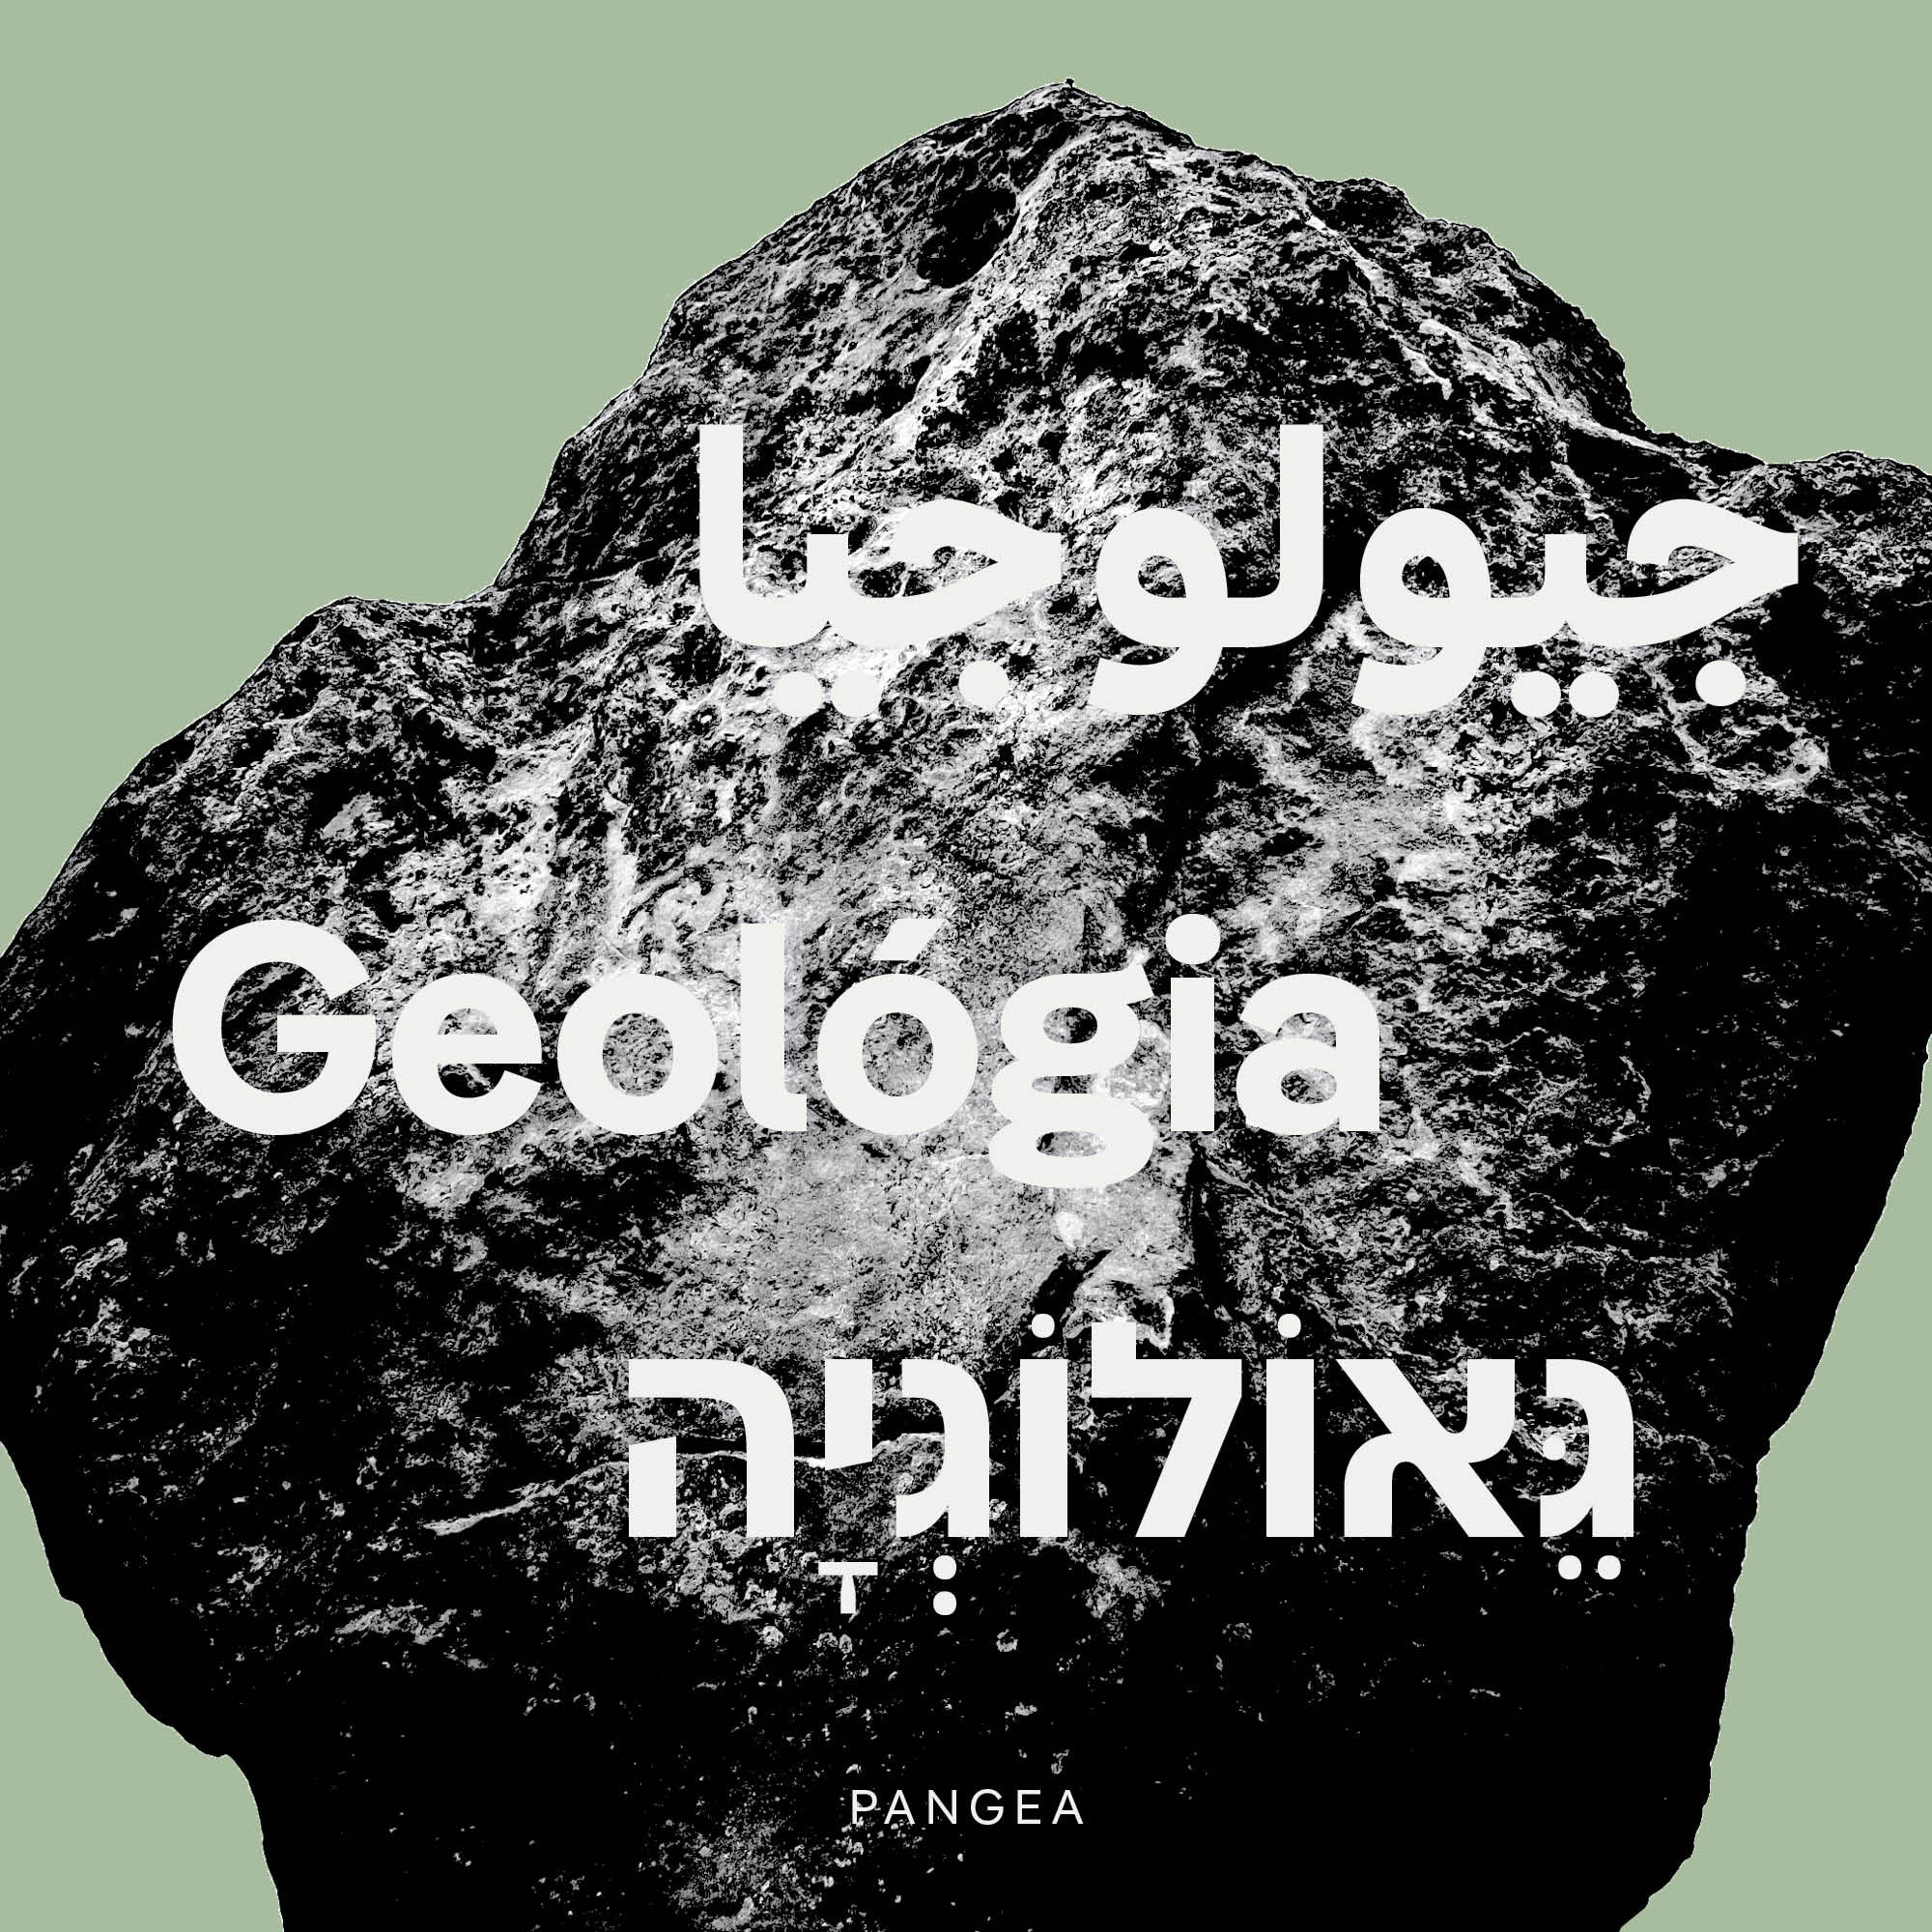 Pangea speaks Arabic and Hebrew